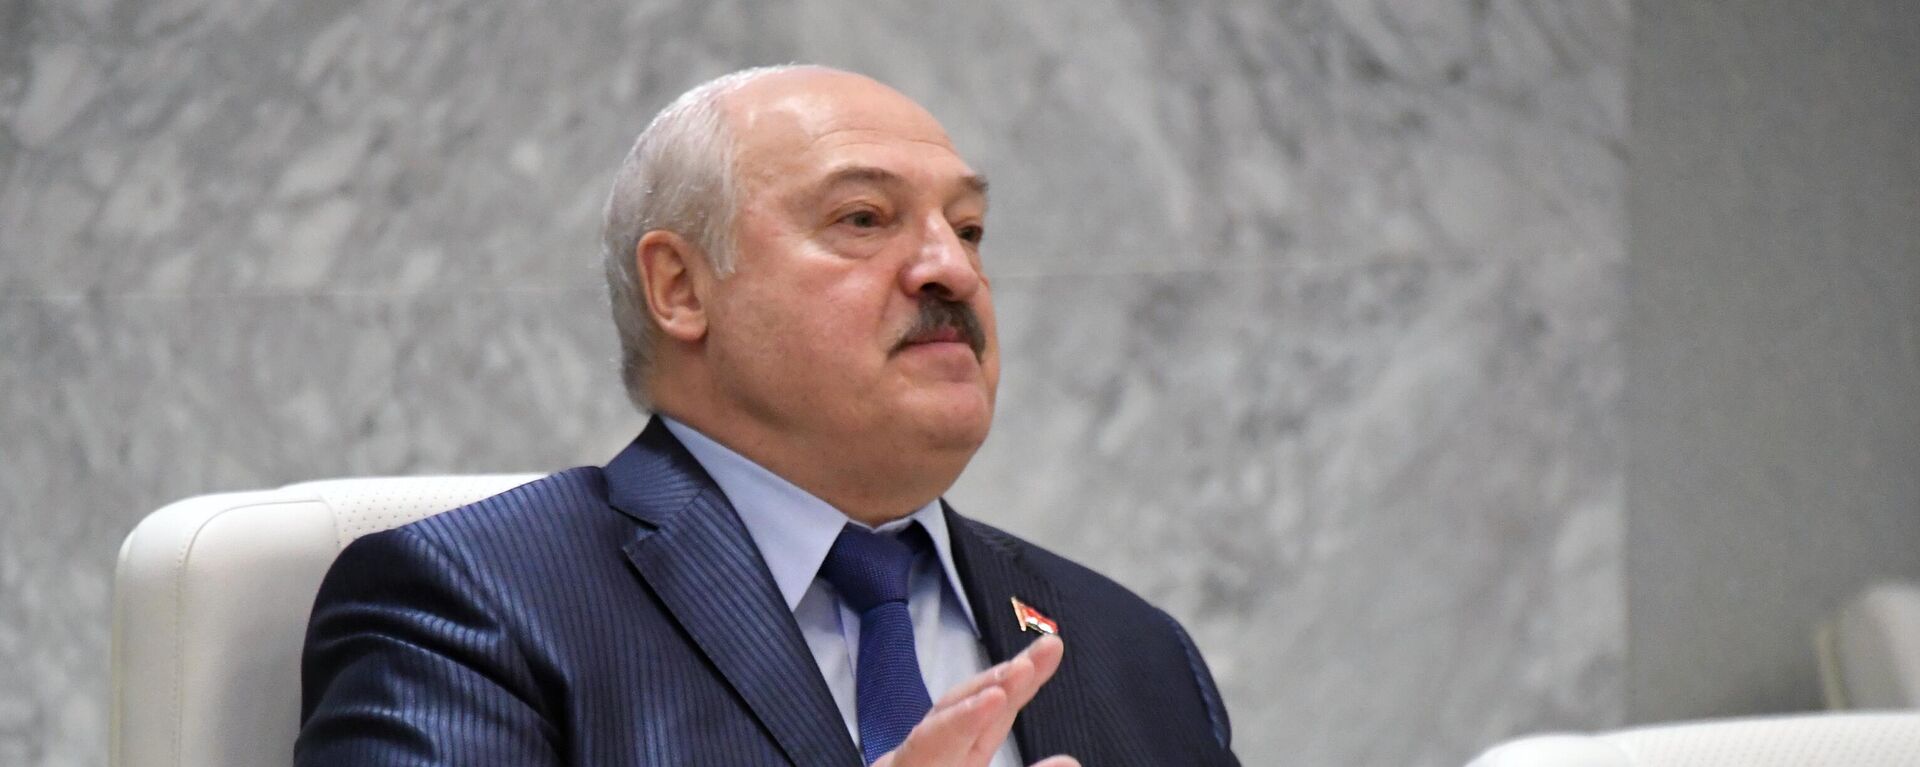 O presidente belarusso, Aleksandr Lukashenko, gesticula durante evento em Vladivostok, na Rússia, 13 de abril de 2022 - Sputnik Brasil, 1920, 15.05.2022